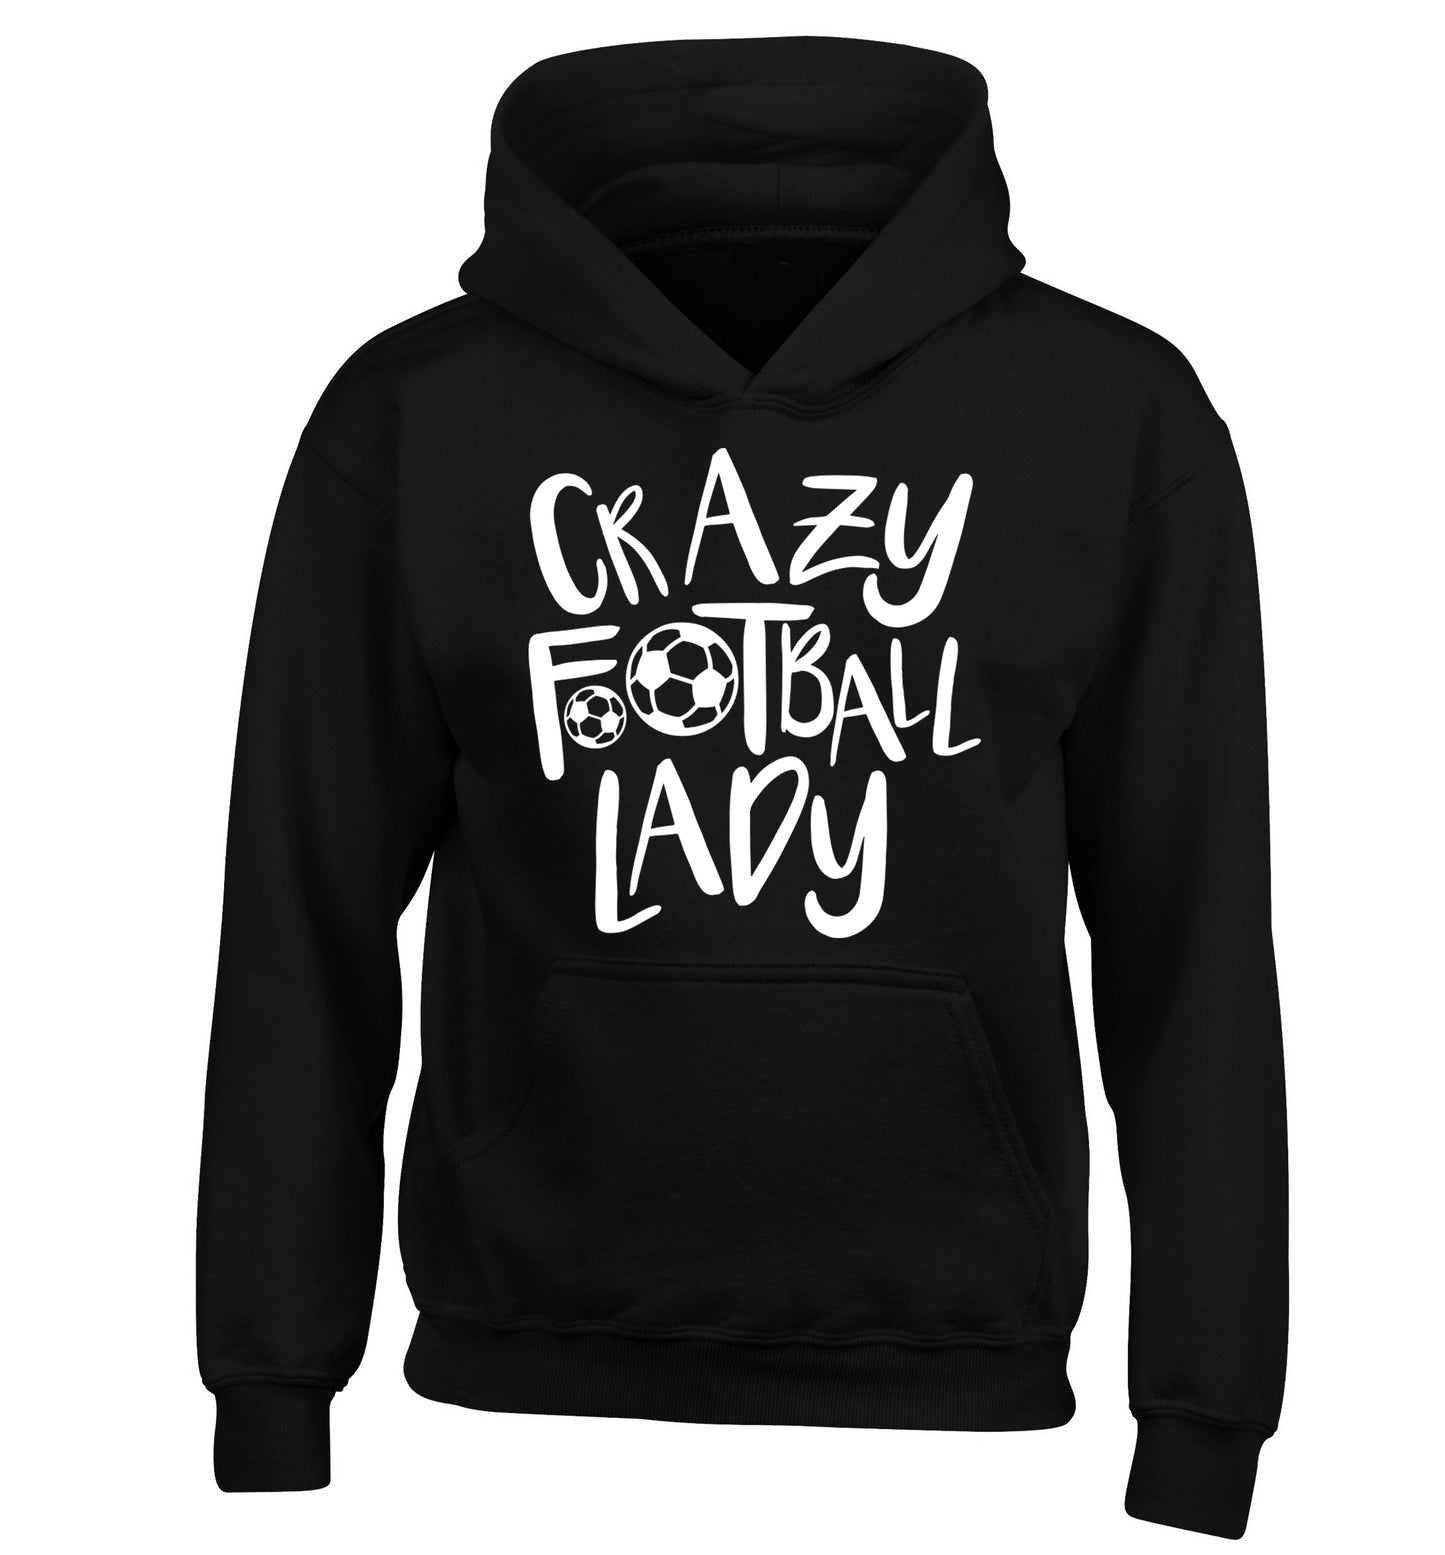 Crazy football lady children's black hoodie 12-14 Years